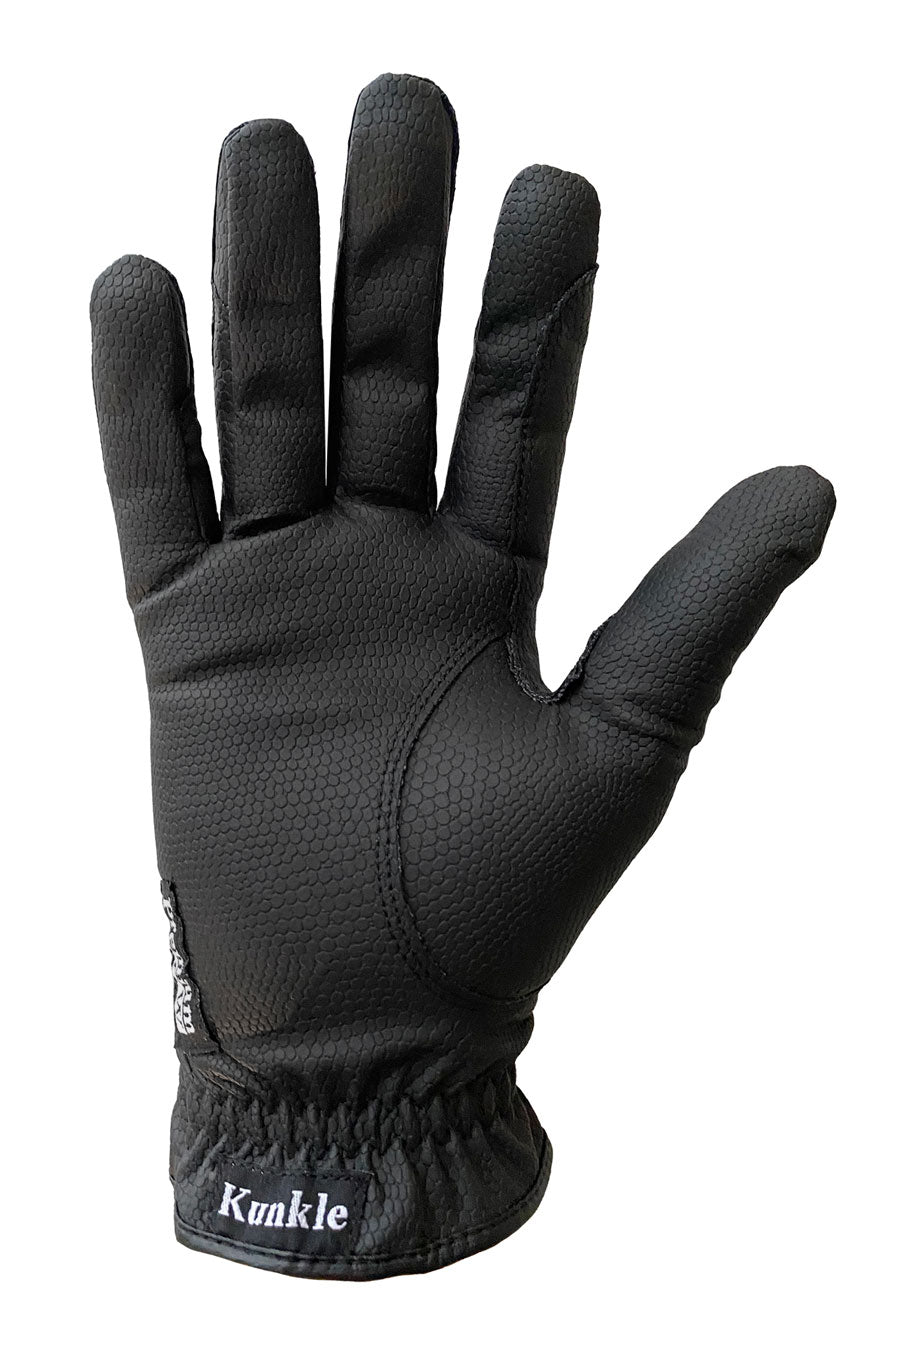 Kunkle mesh gloves black and Navy